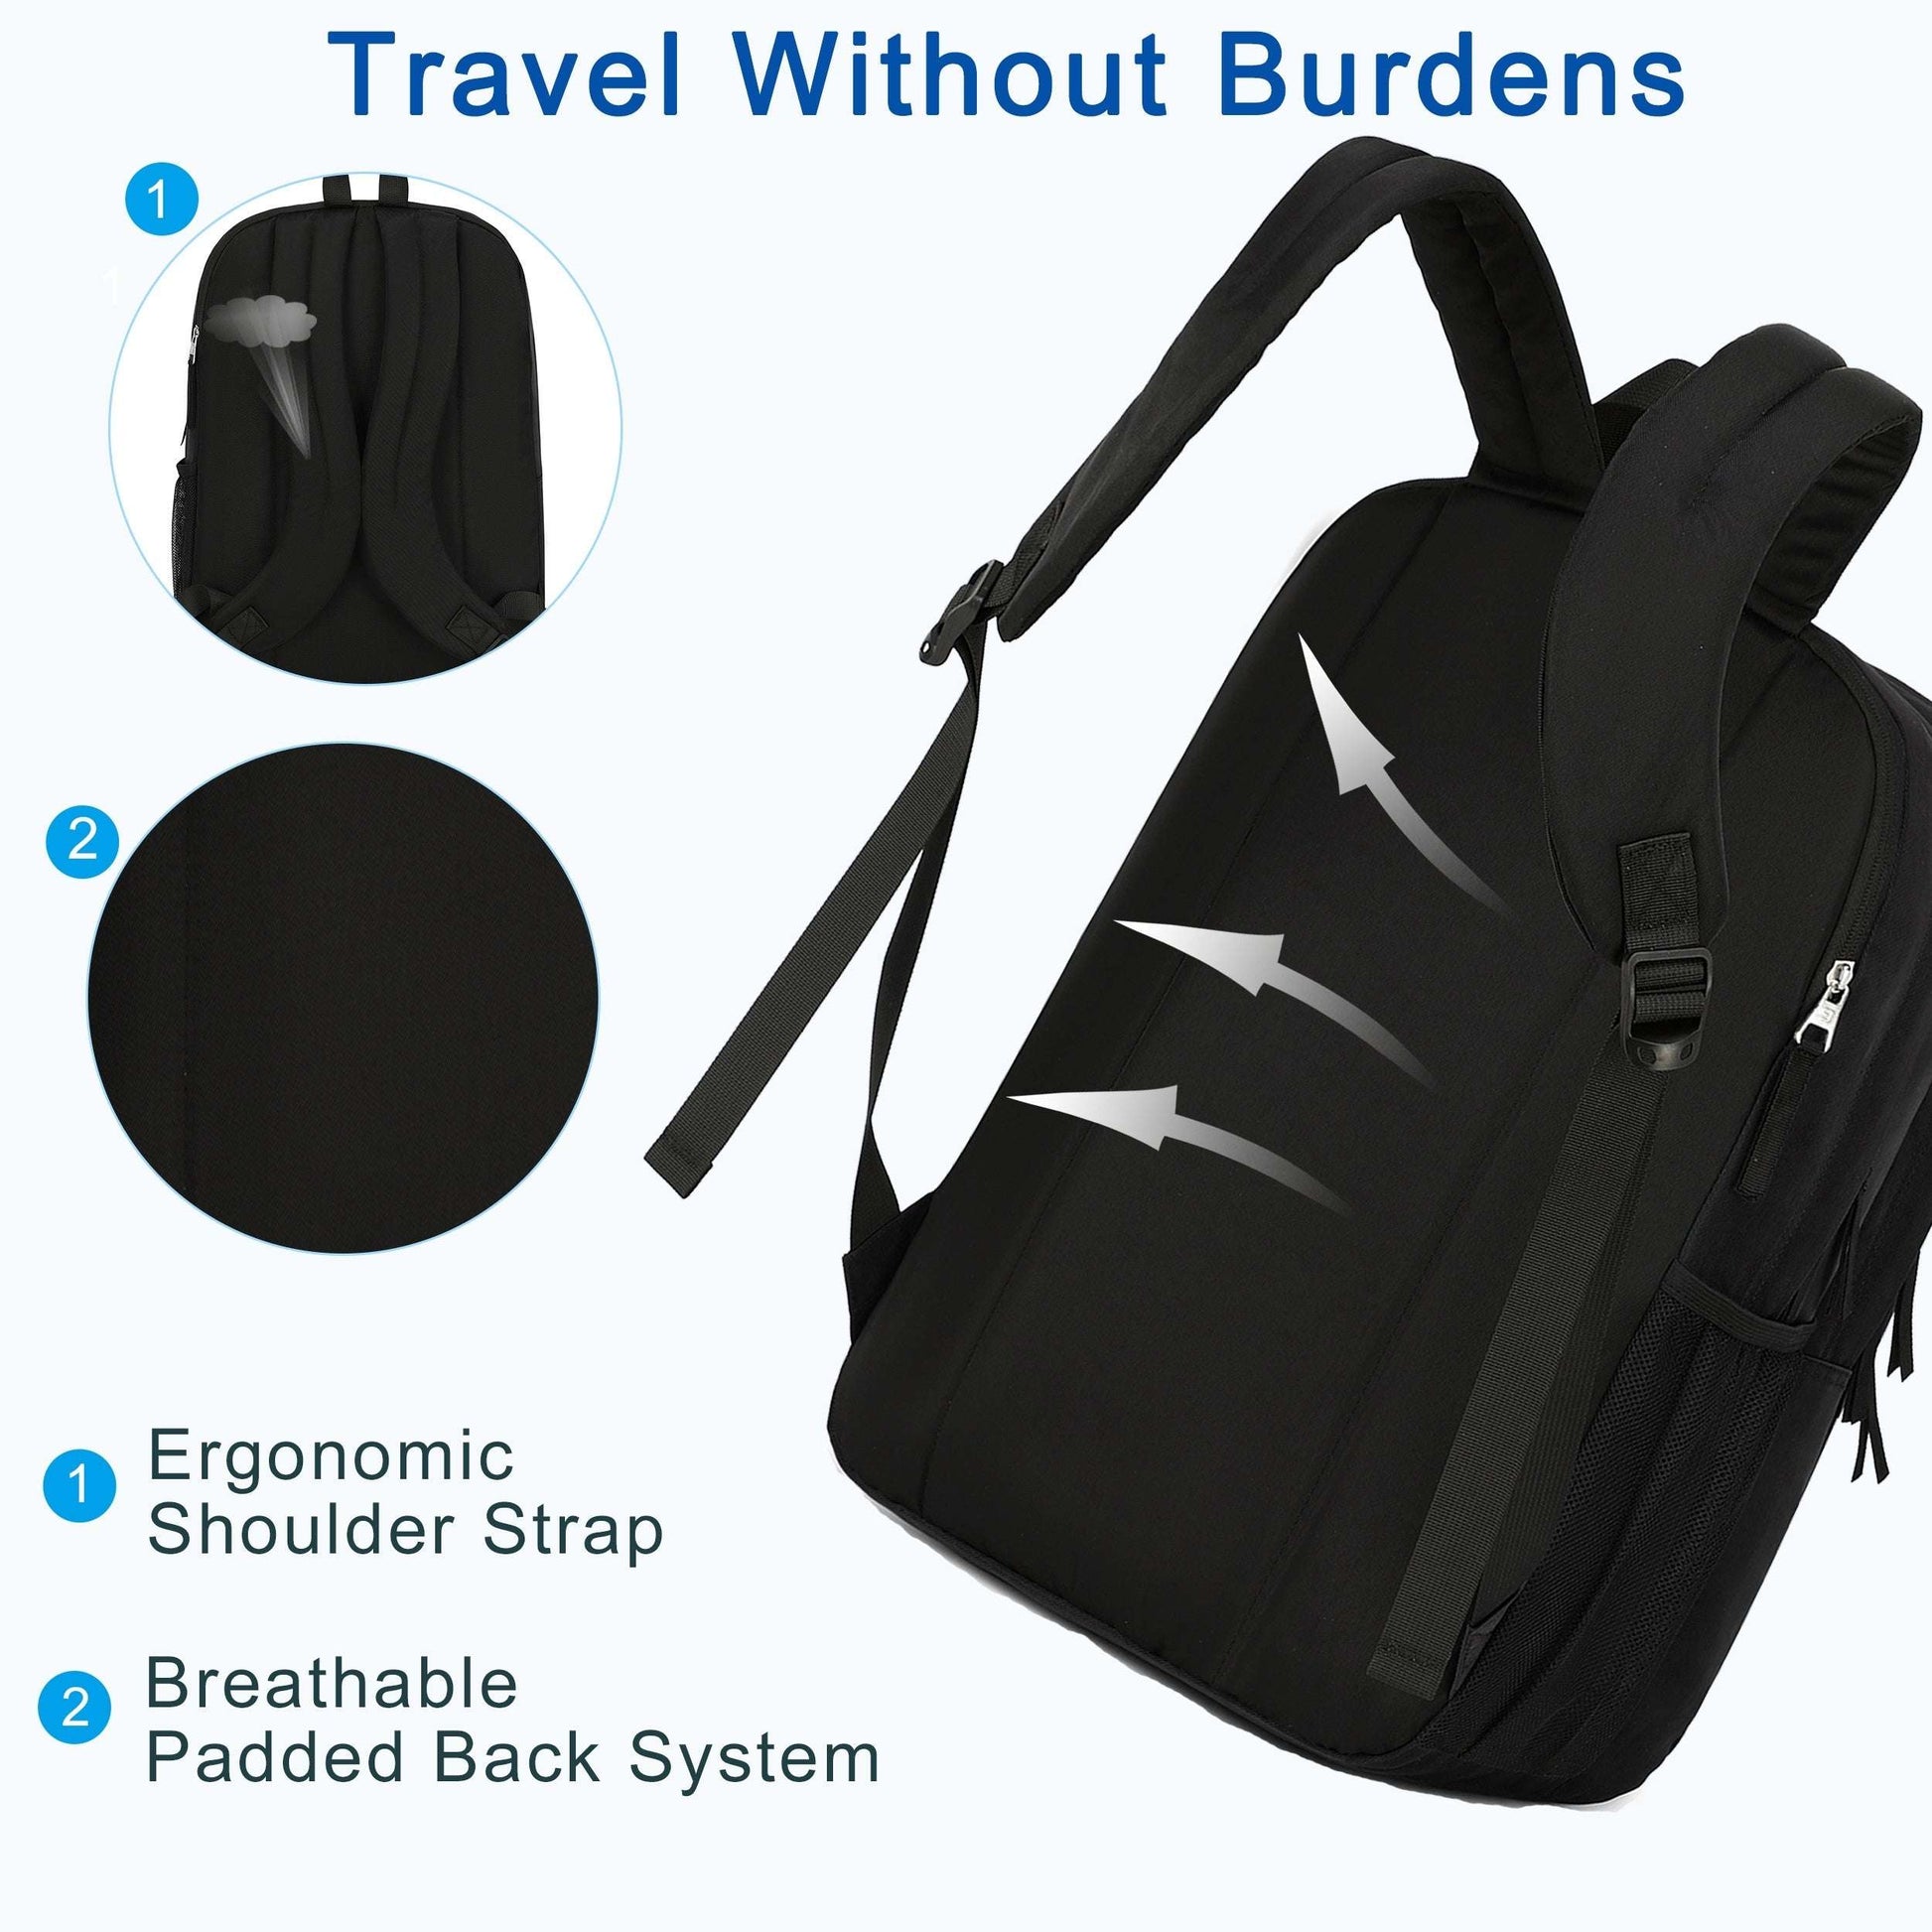 Laptop Backpack 17 inch for Women Men Large College Bookbags Waterproof 27 Backpack OK•PhotoFineArt OK•PhotoFineArt